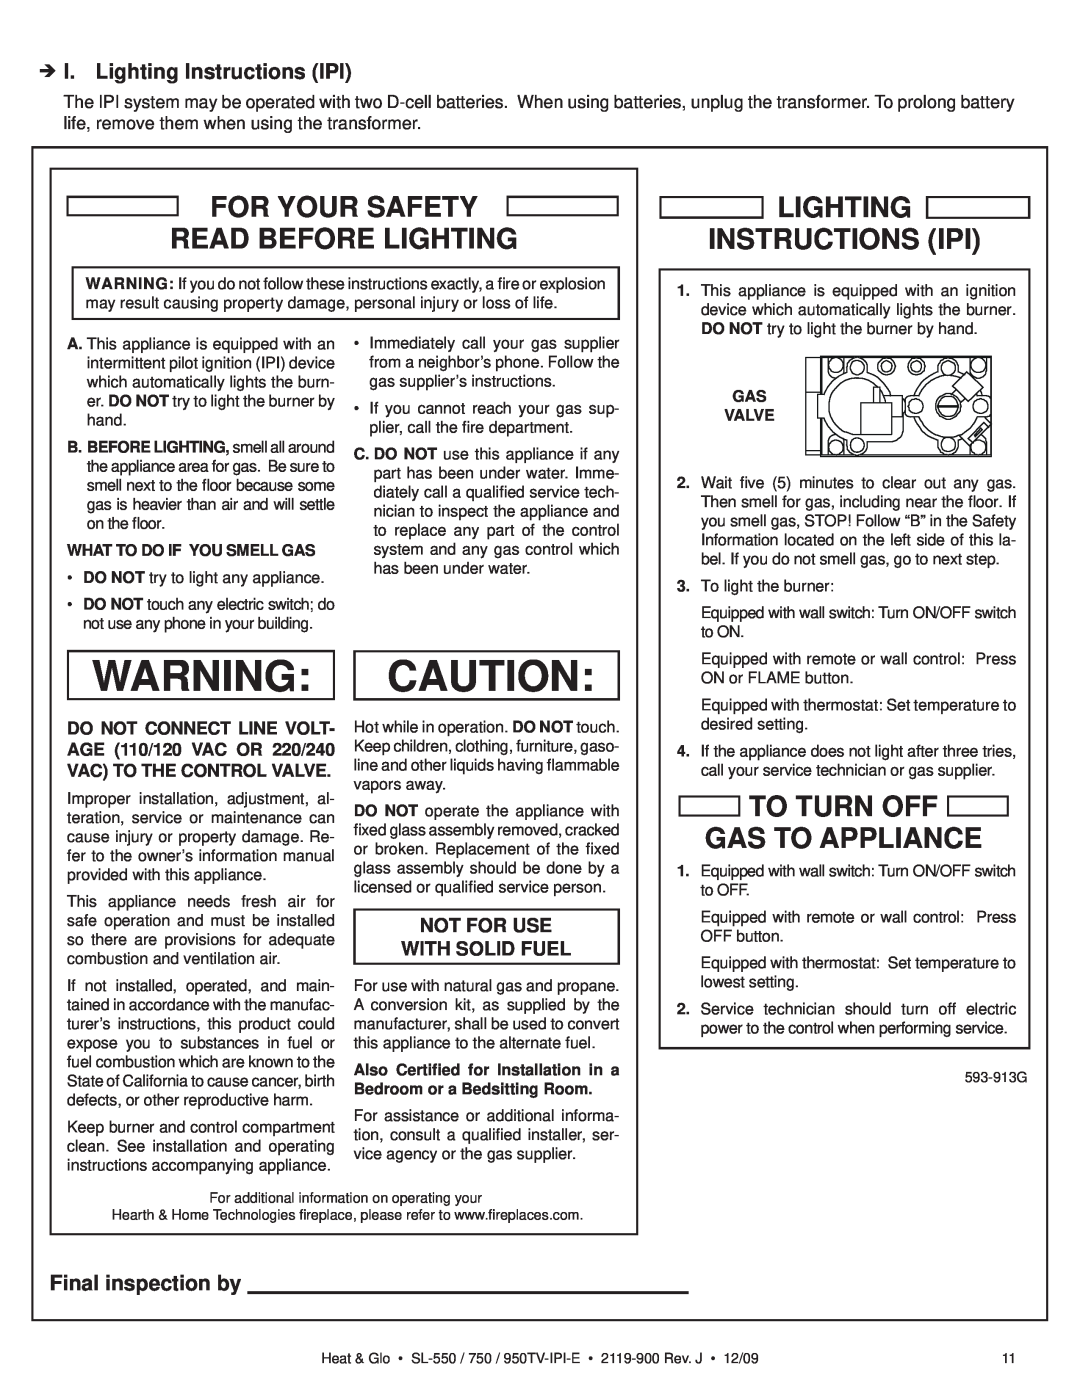 Heat & Glo LifeStyle SL-550TV-IPI-E ÎI. Lighting Instructions IPI, Final inspection by, Lighting Instructions Ipi 